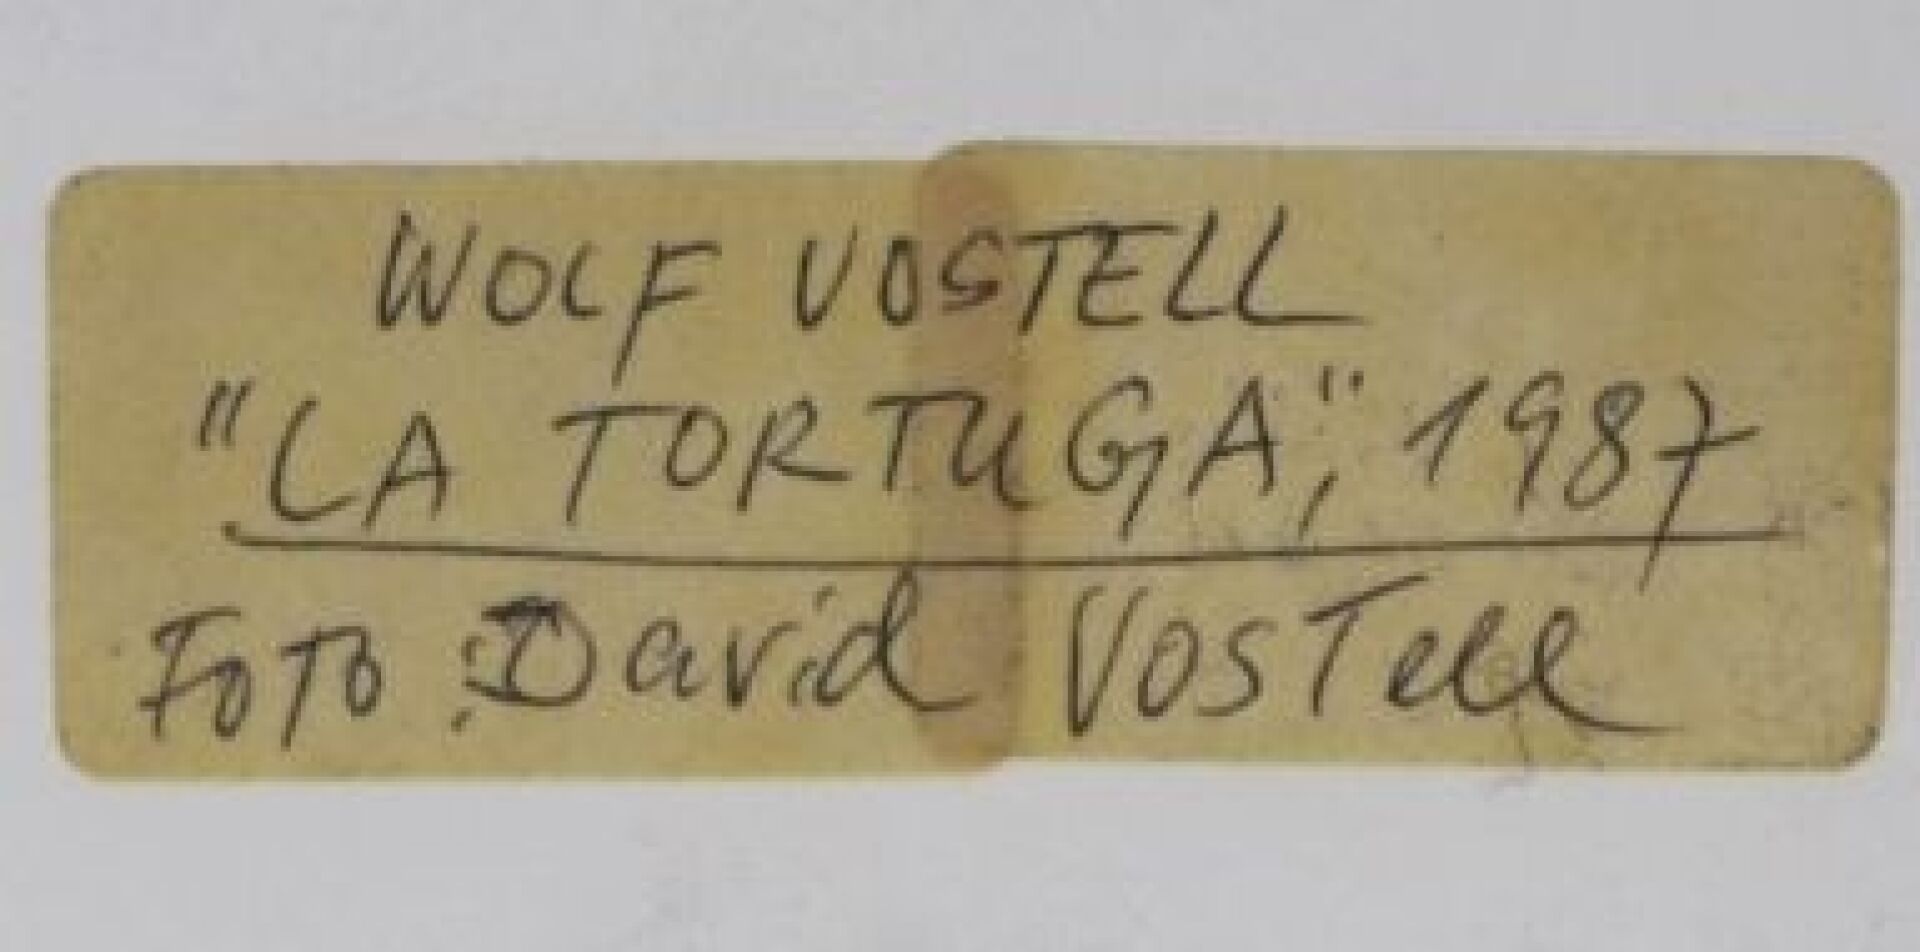 Wolf VOSTELL (1932-1998). - "La tortuga" - 1987. - Tirage argentique contrecollé [...] - Image 18 of 18